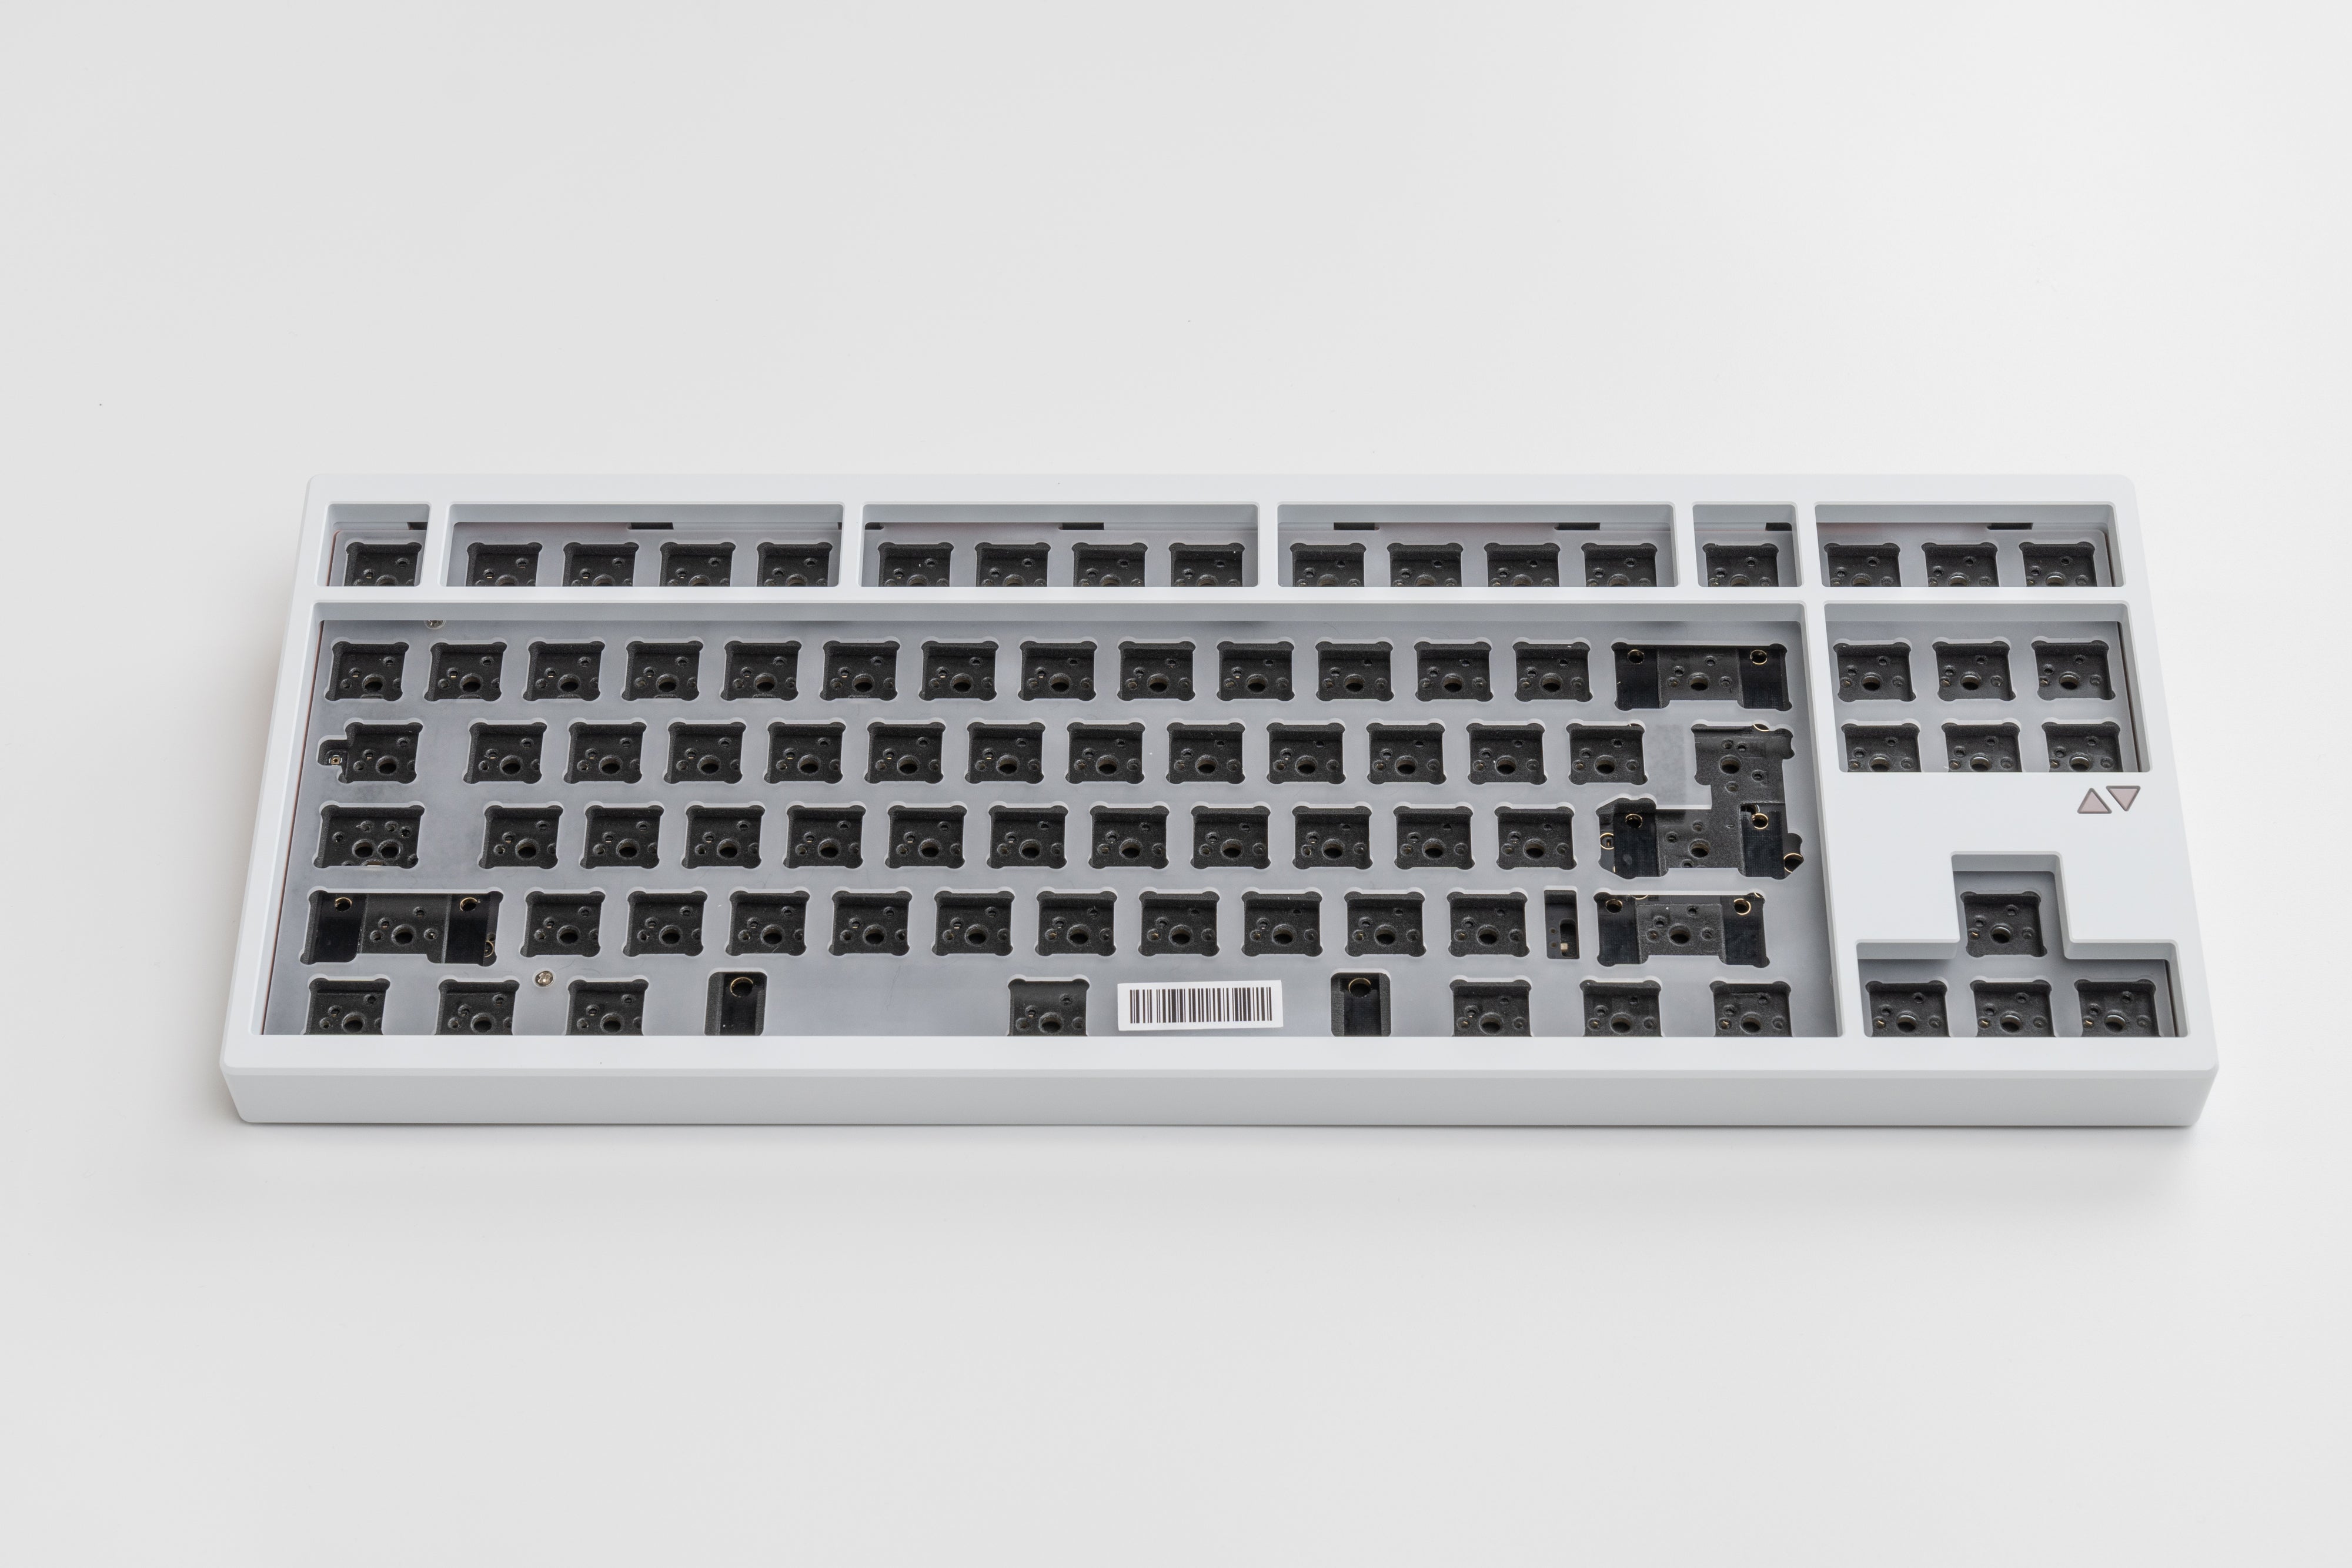 IN-STOCK] LUMINKEY80 80% Custom Mechanical Keyboard